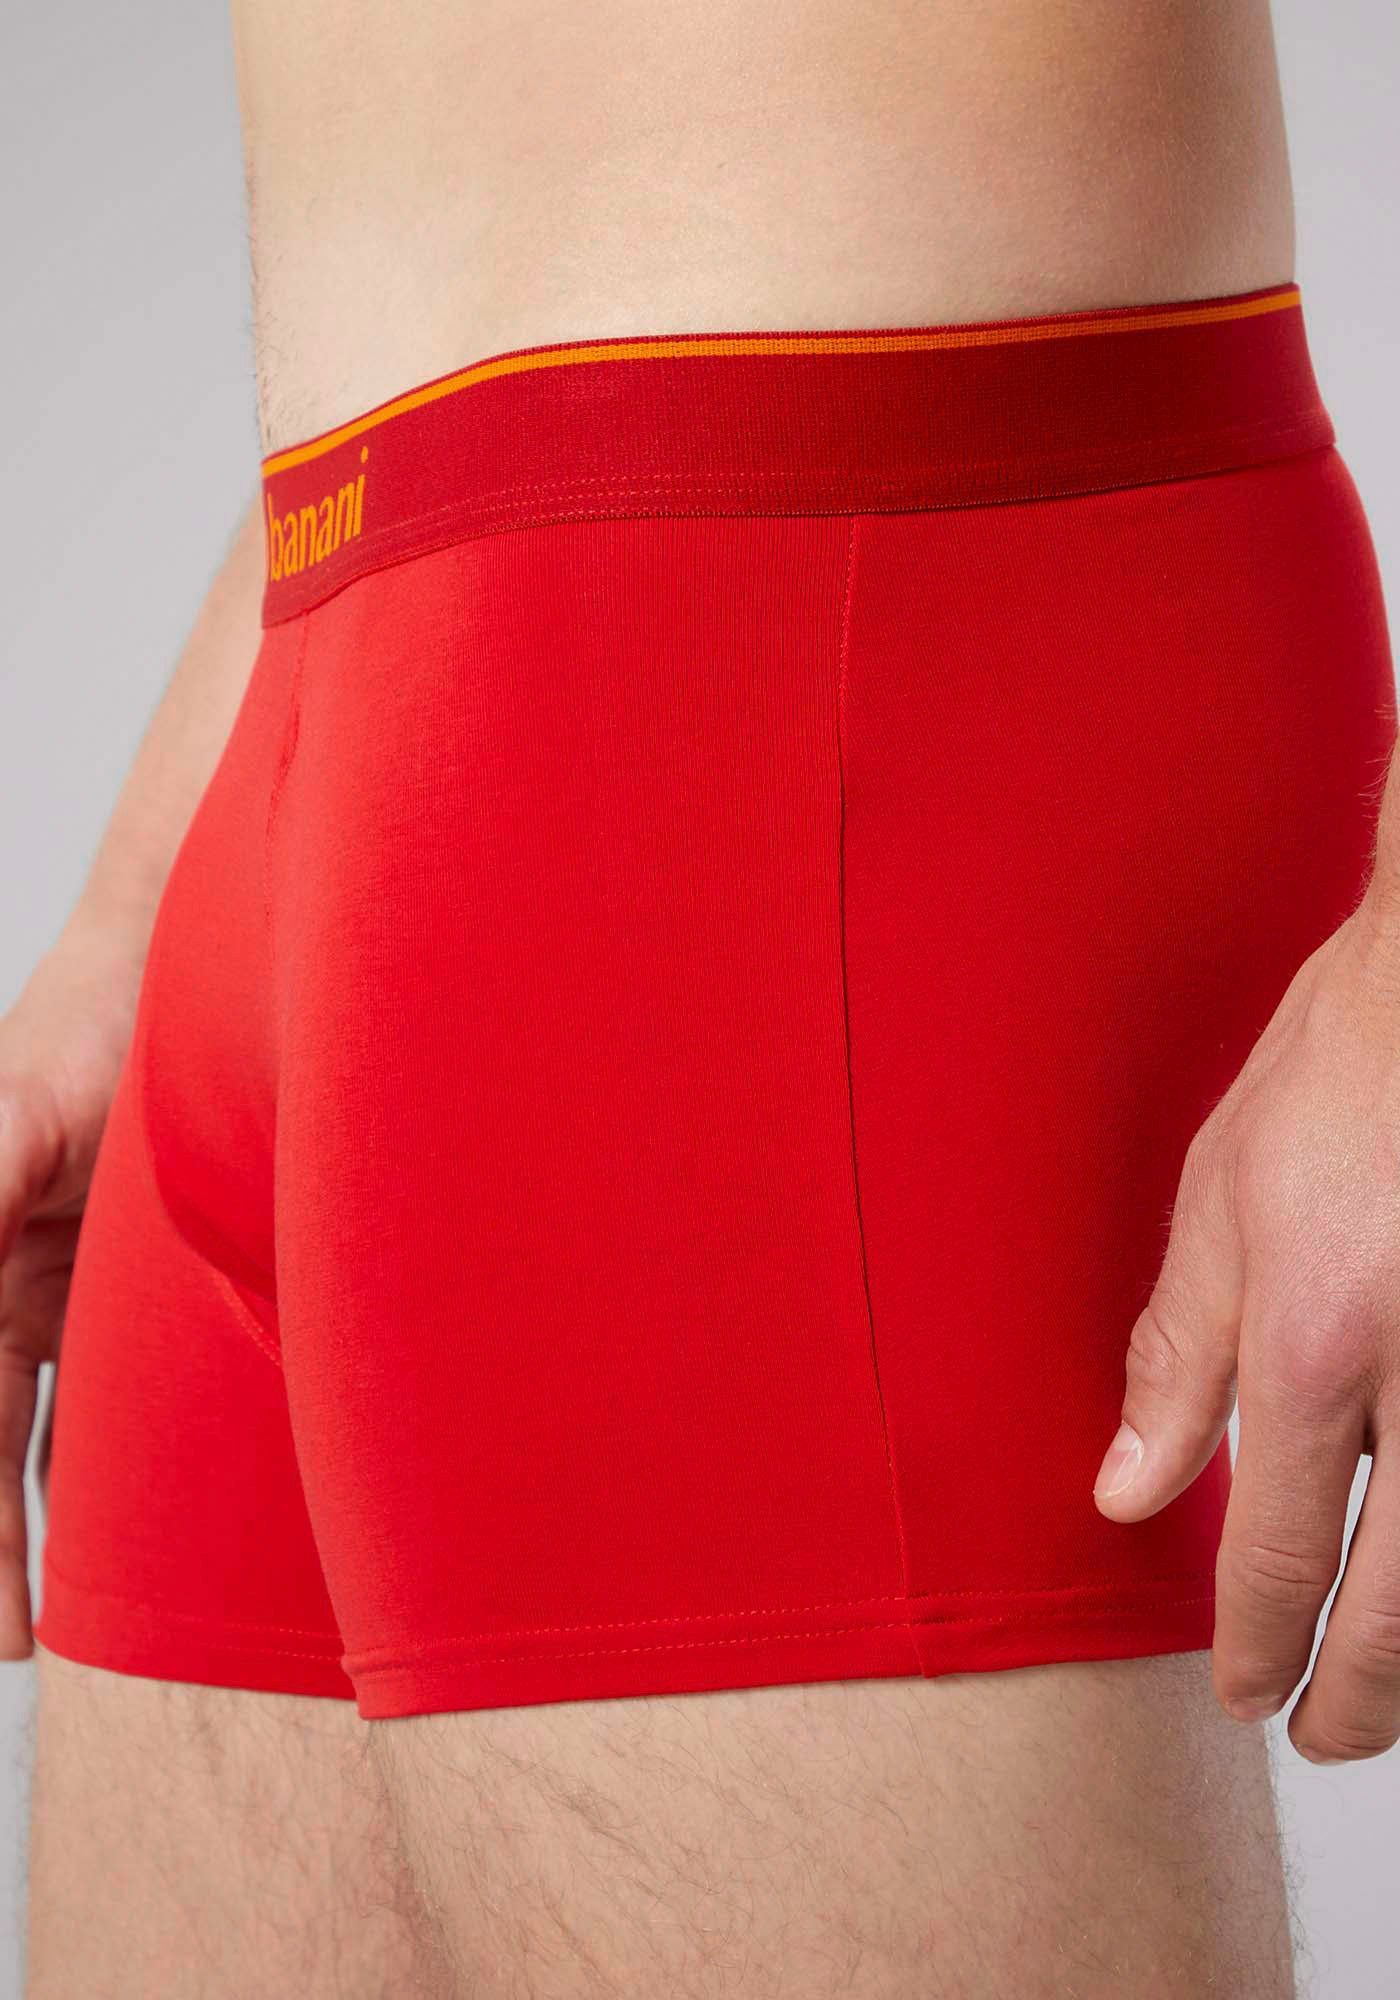 Bruno Banani Boxershorts Short 2-St) Kontrastfarbene Details 2Pack Access rot-schwarz (Packung, Quick